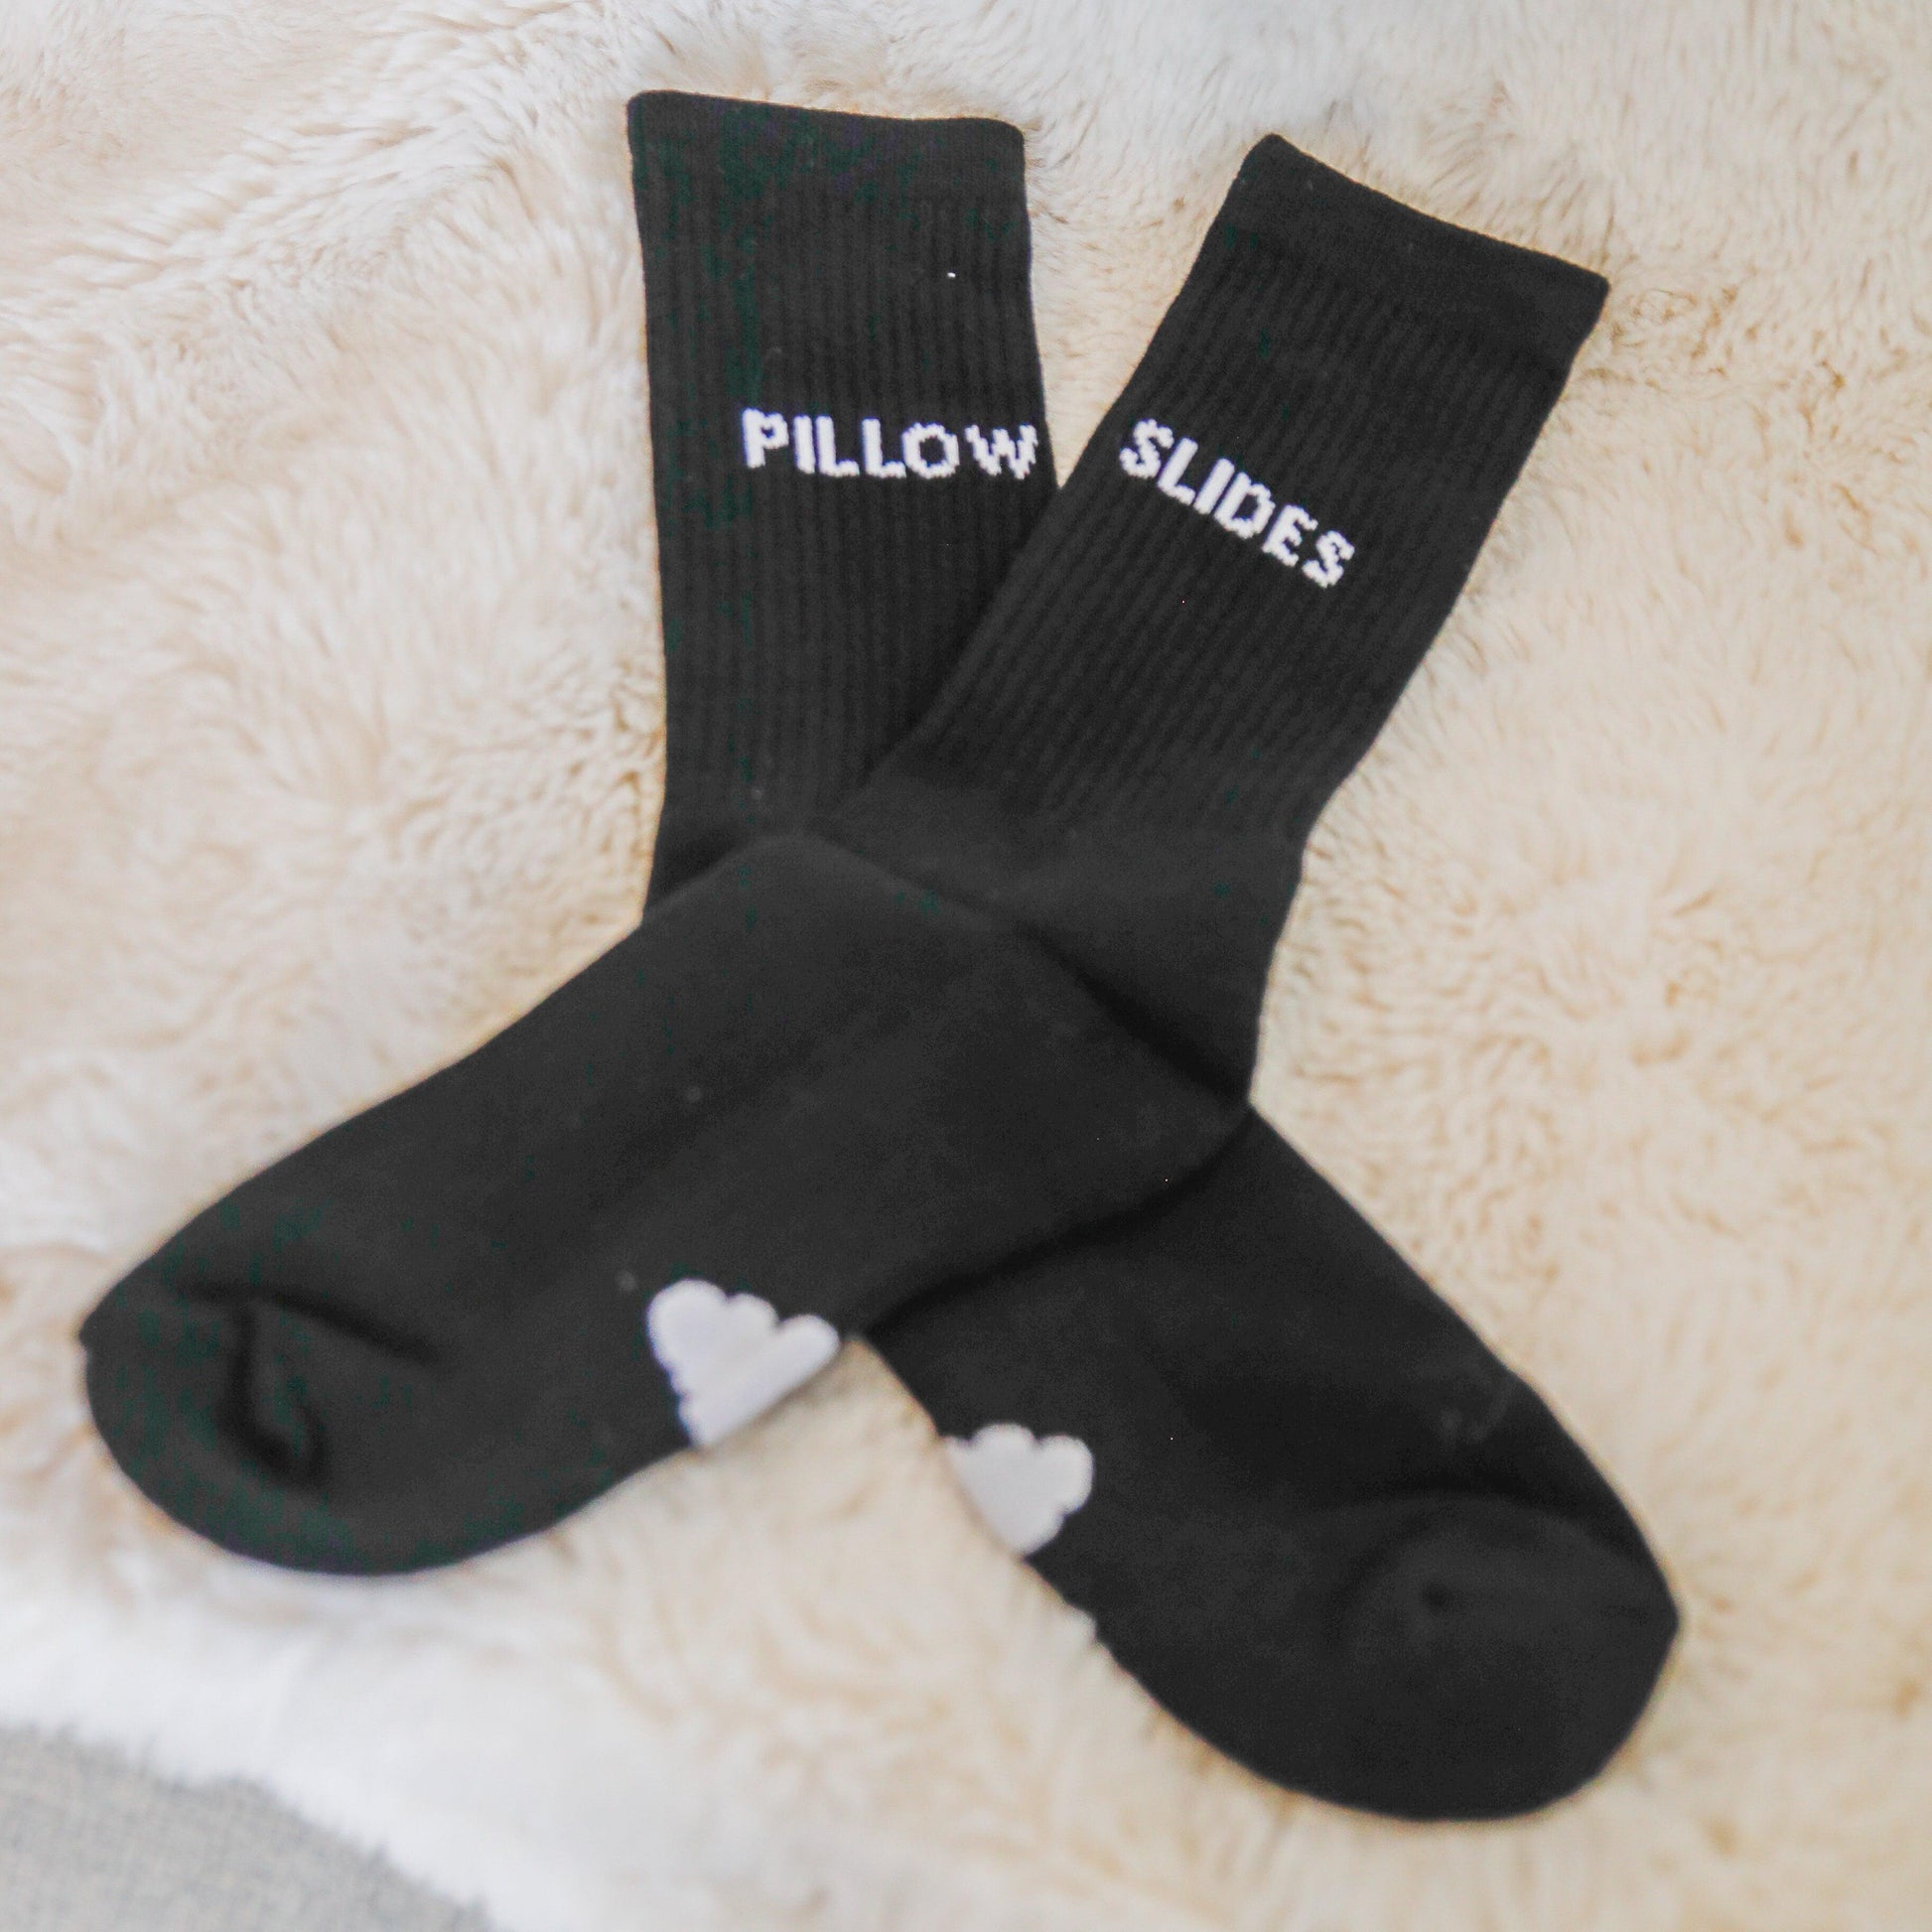 Black cloudy pillow socks on carpet